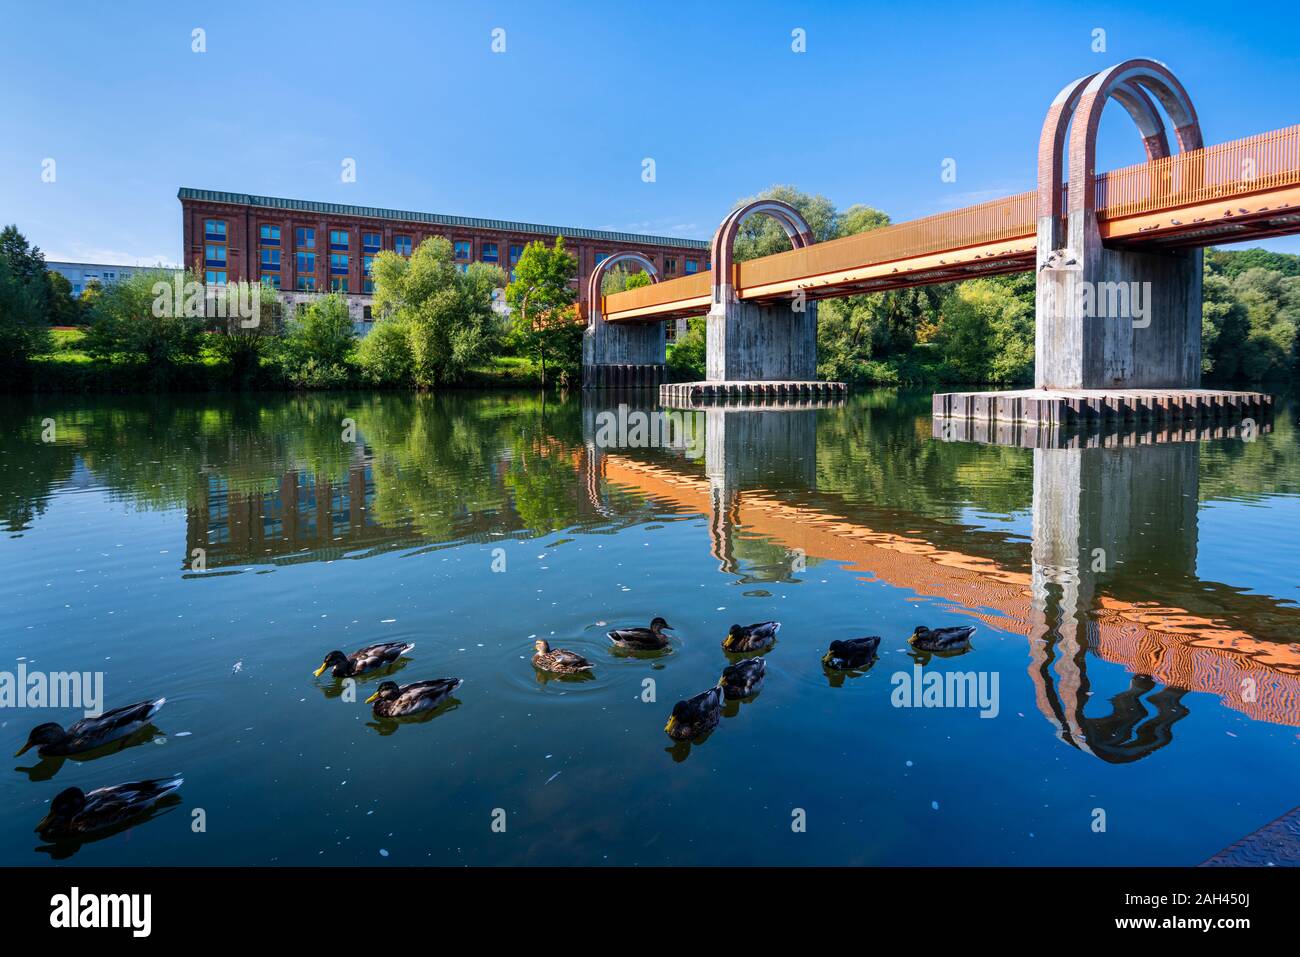 Germania, Baden-Württemberg, Plochingen, anatre nuotare nel fiume Neckar con ponte Neckarbrucke in background Foto Stock